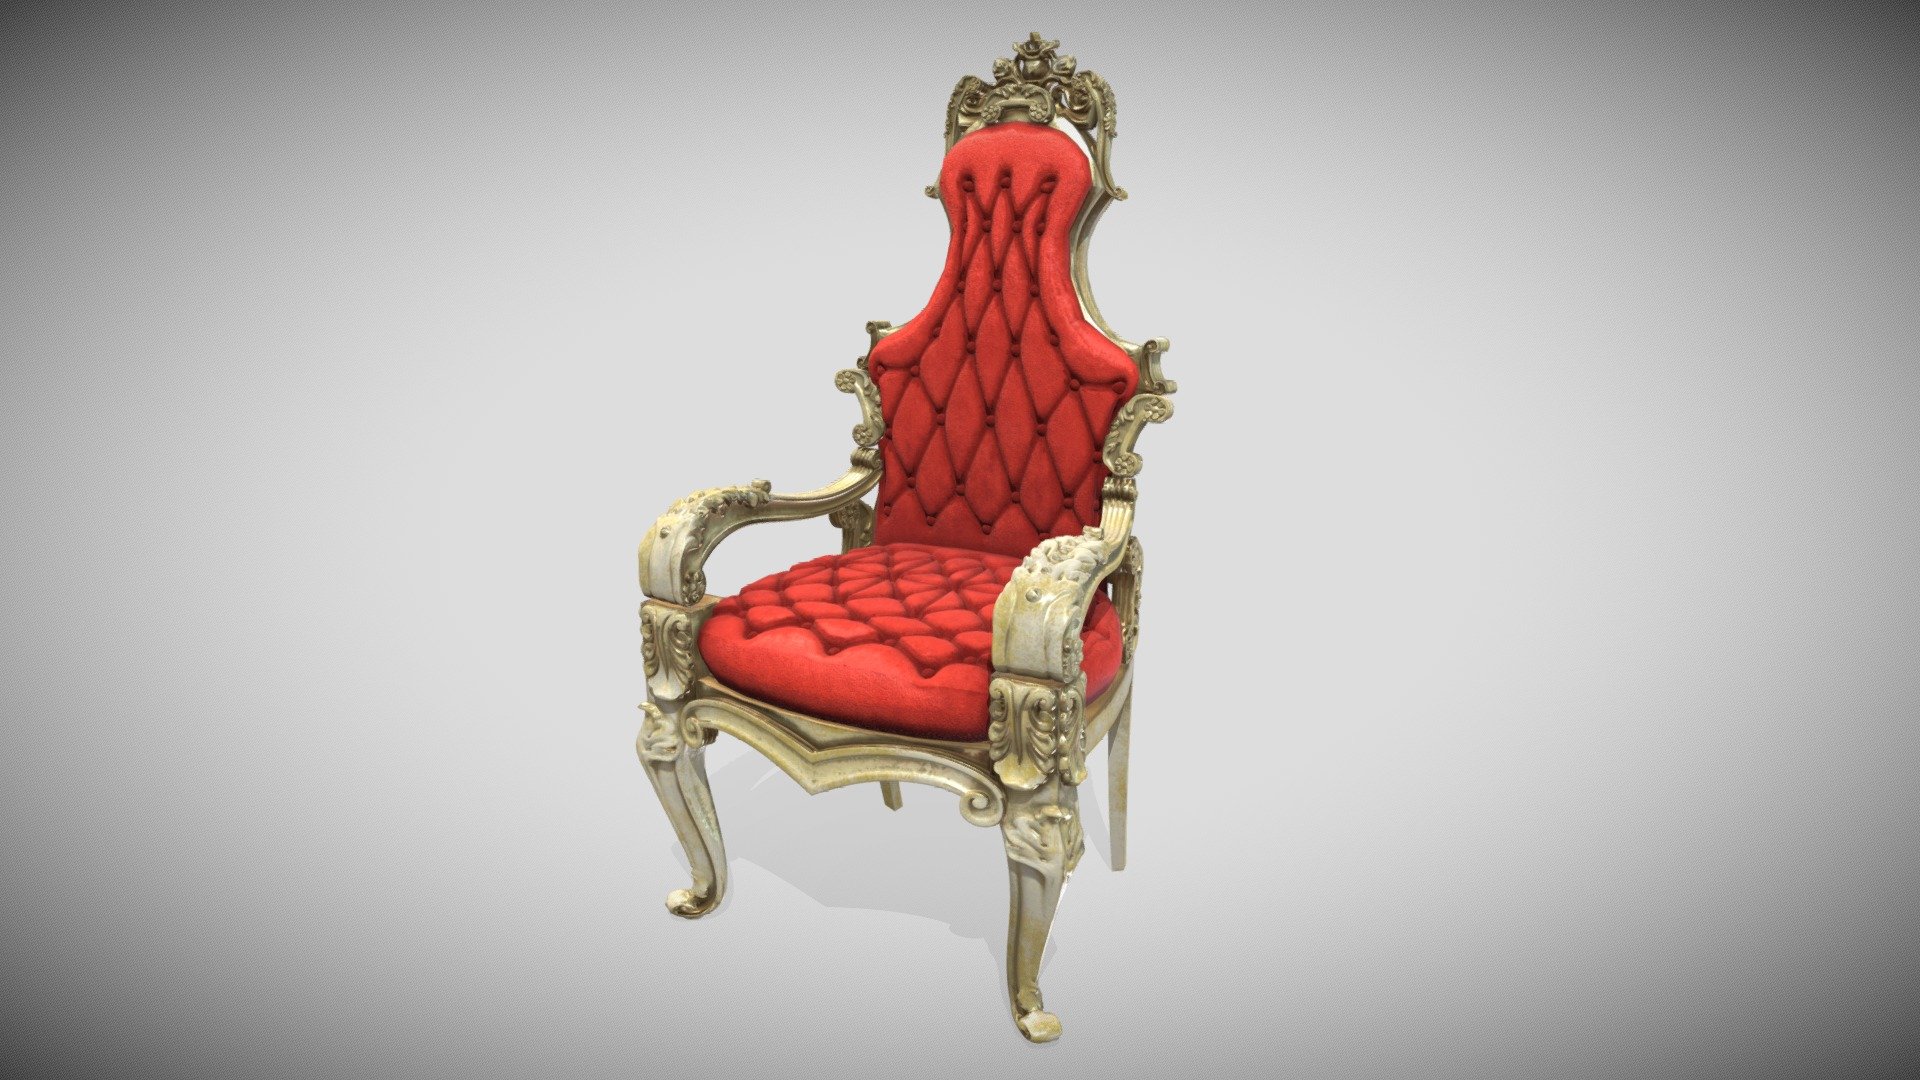 Two Material PBR Metalness 4k - Throne - Juu - Buy Royalty Free 3D model by Francesco Coldesina (@topfrank2013) 3d model